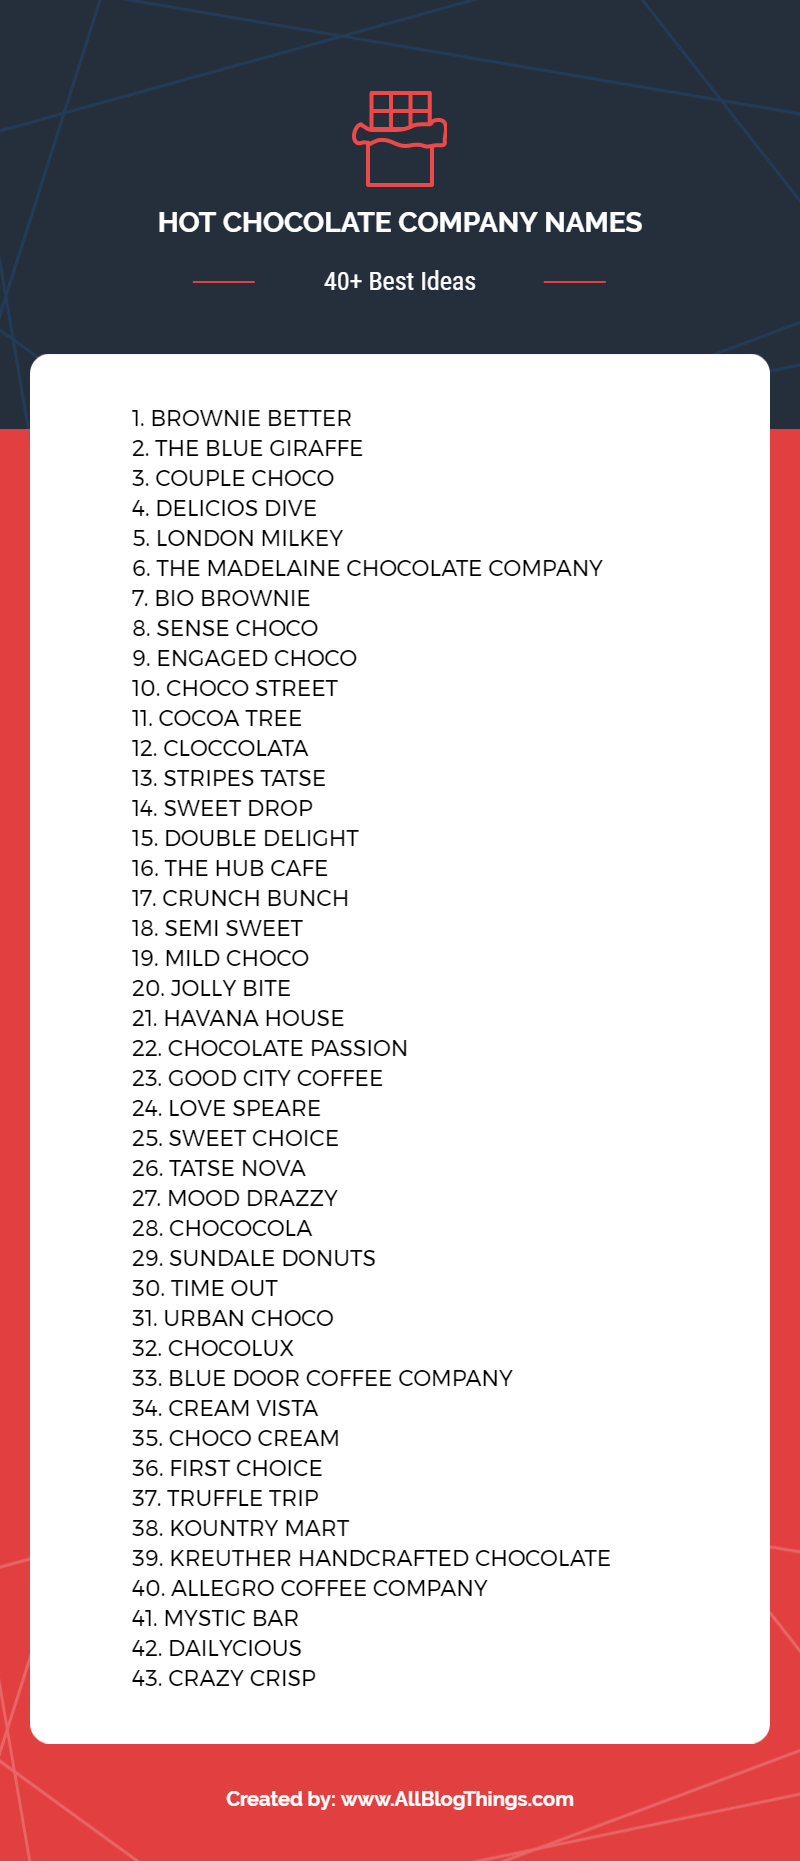 Hot Chocolate Company Name Ideas (Infograpic)